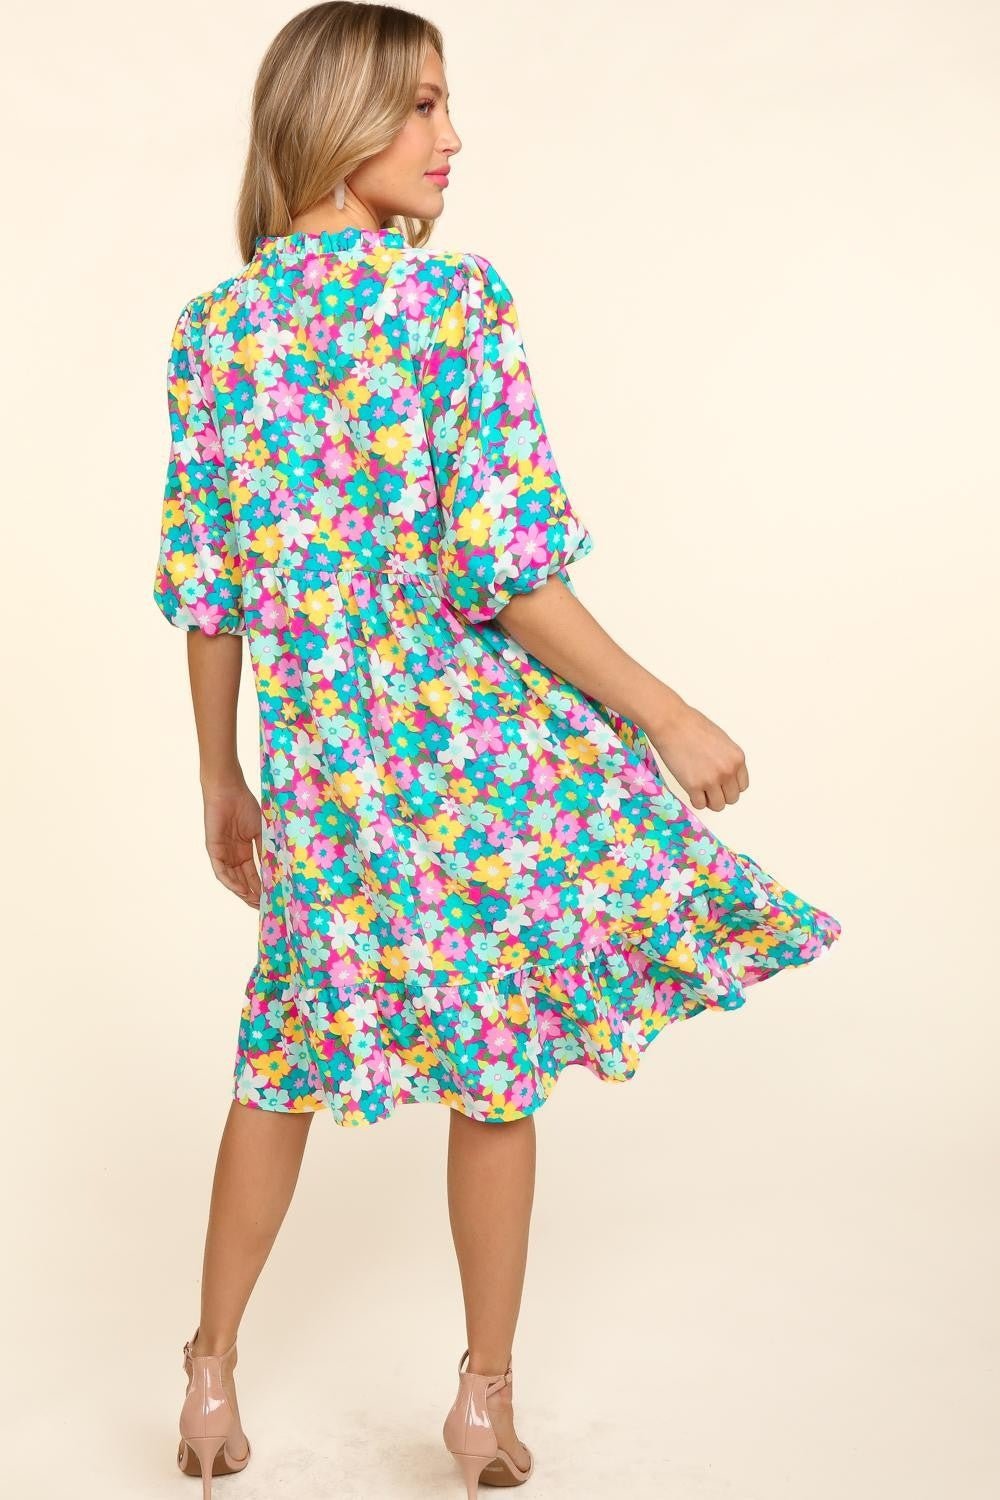 Bubble Sleeve Floral Ruffled Knee-Length Dress in Mint FuchsiaKnee-Length DressHaptics